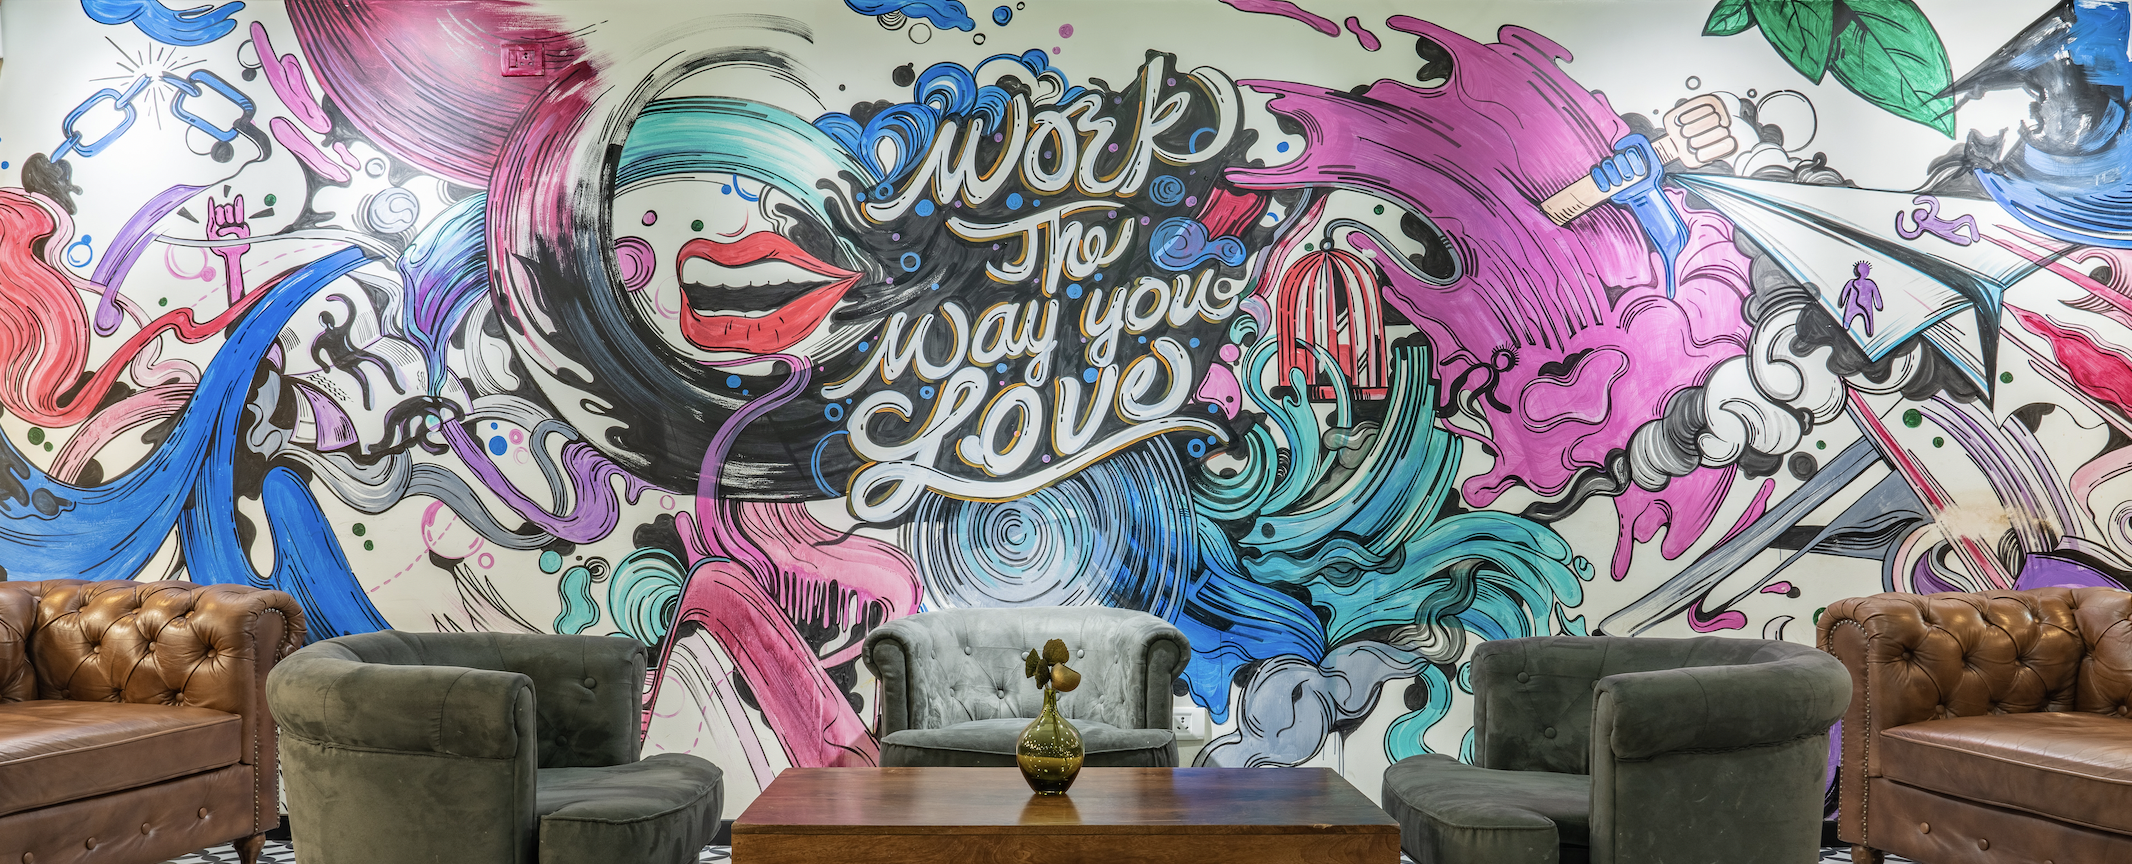 Coffeeshop with graffiti art